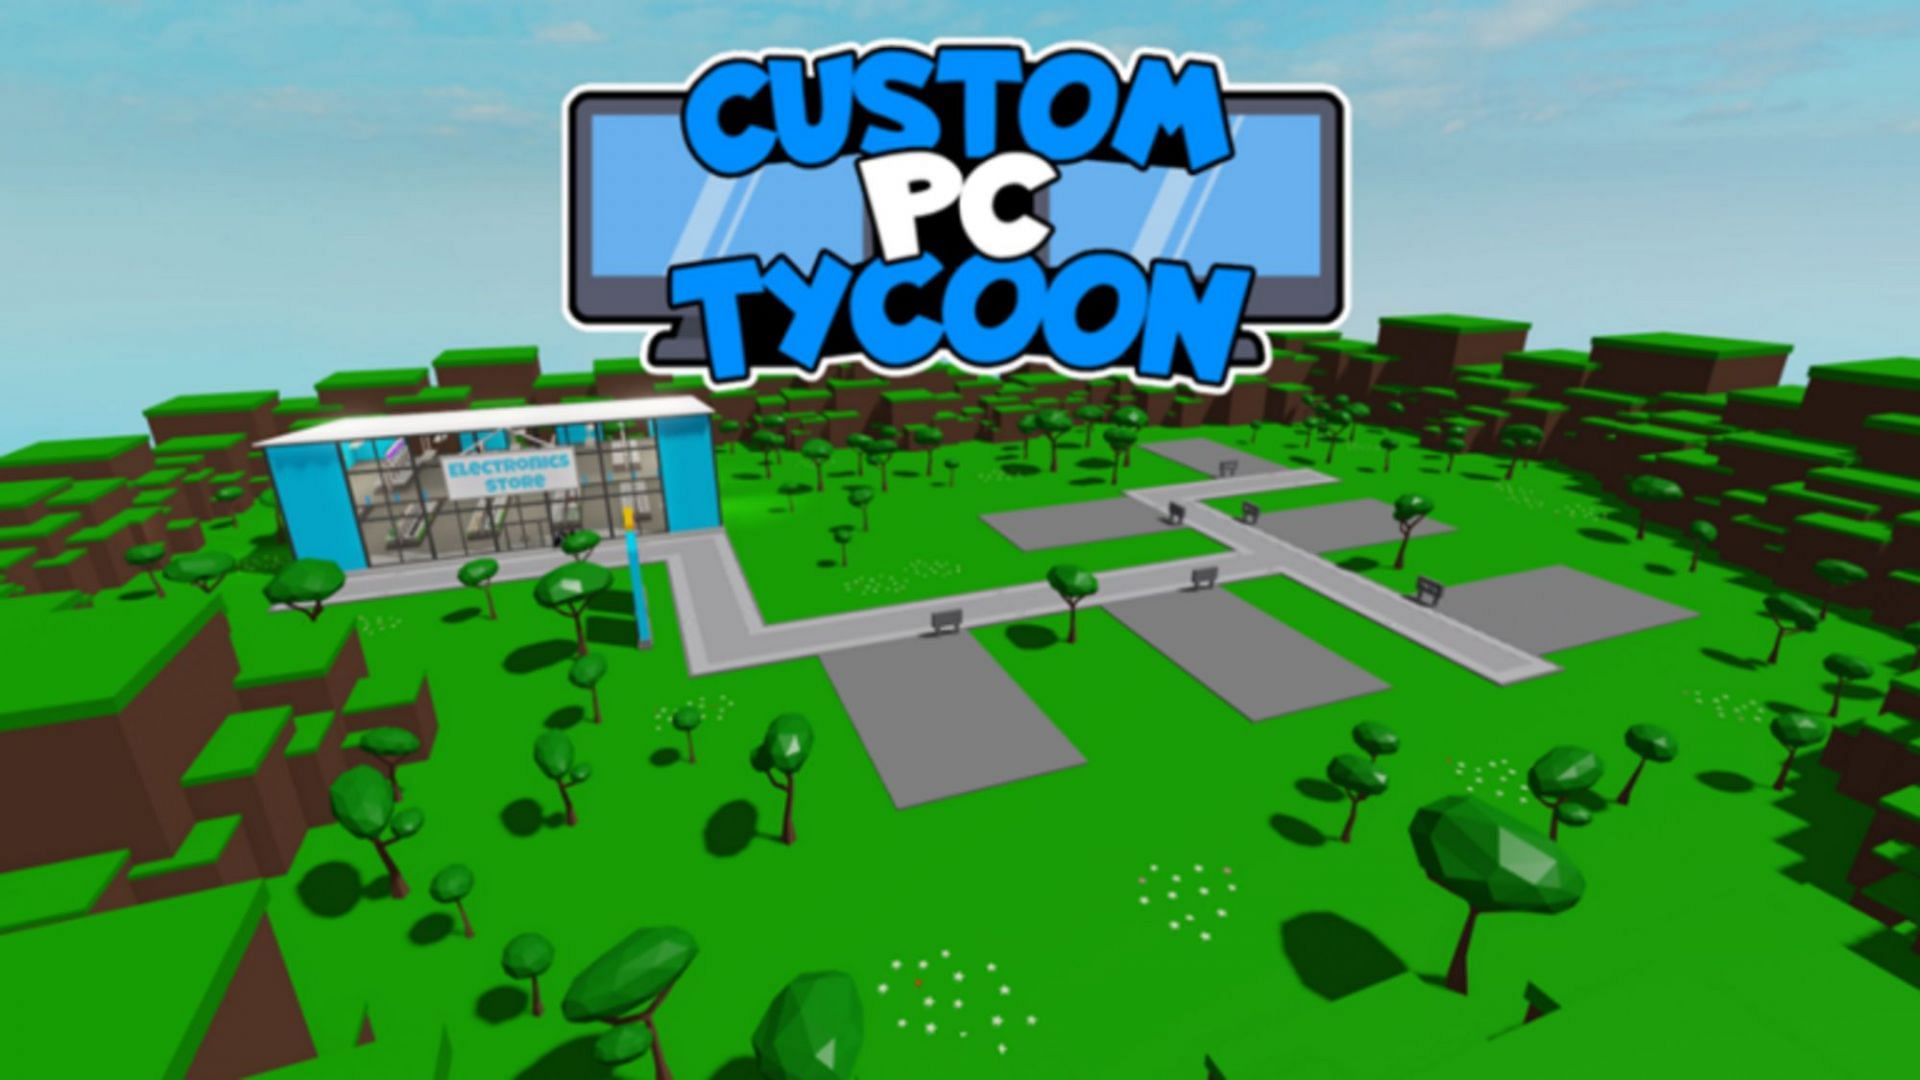 Codes to redeem free rewards in Roblox Custom PC Tycoon (Image via Roblox)